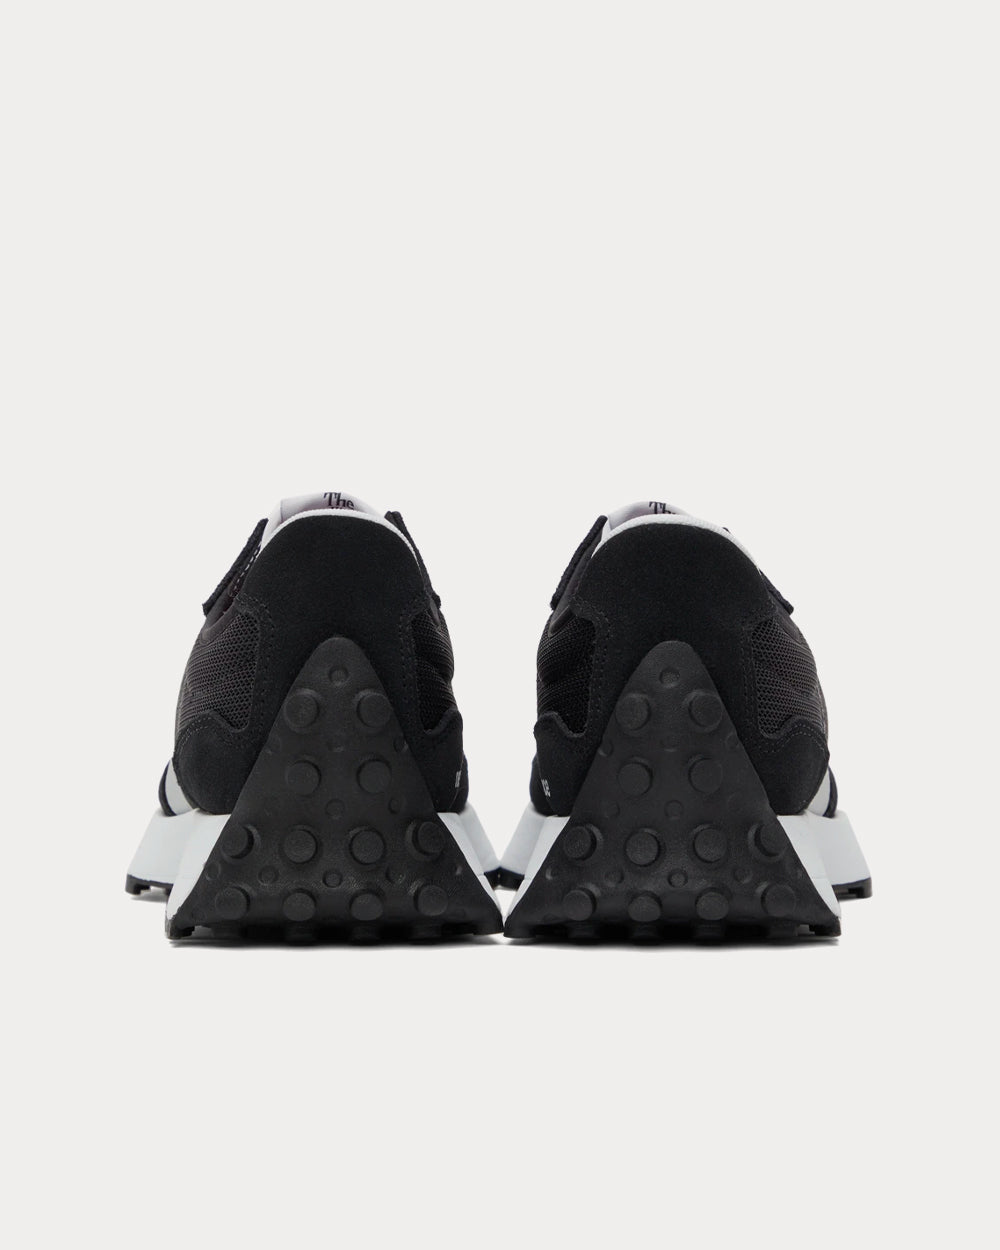 New Balance - 327 Black / Metallic Silver Low Top Sneakers